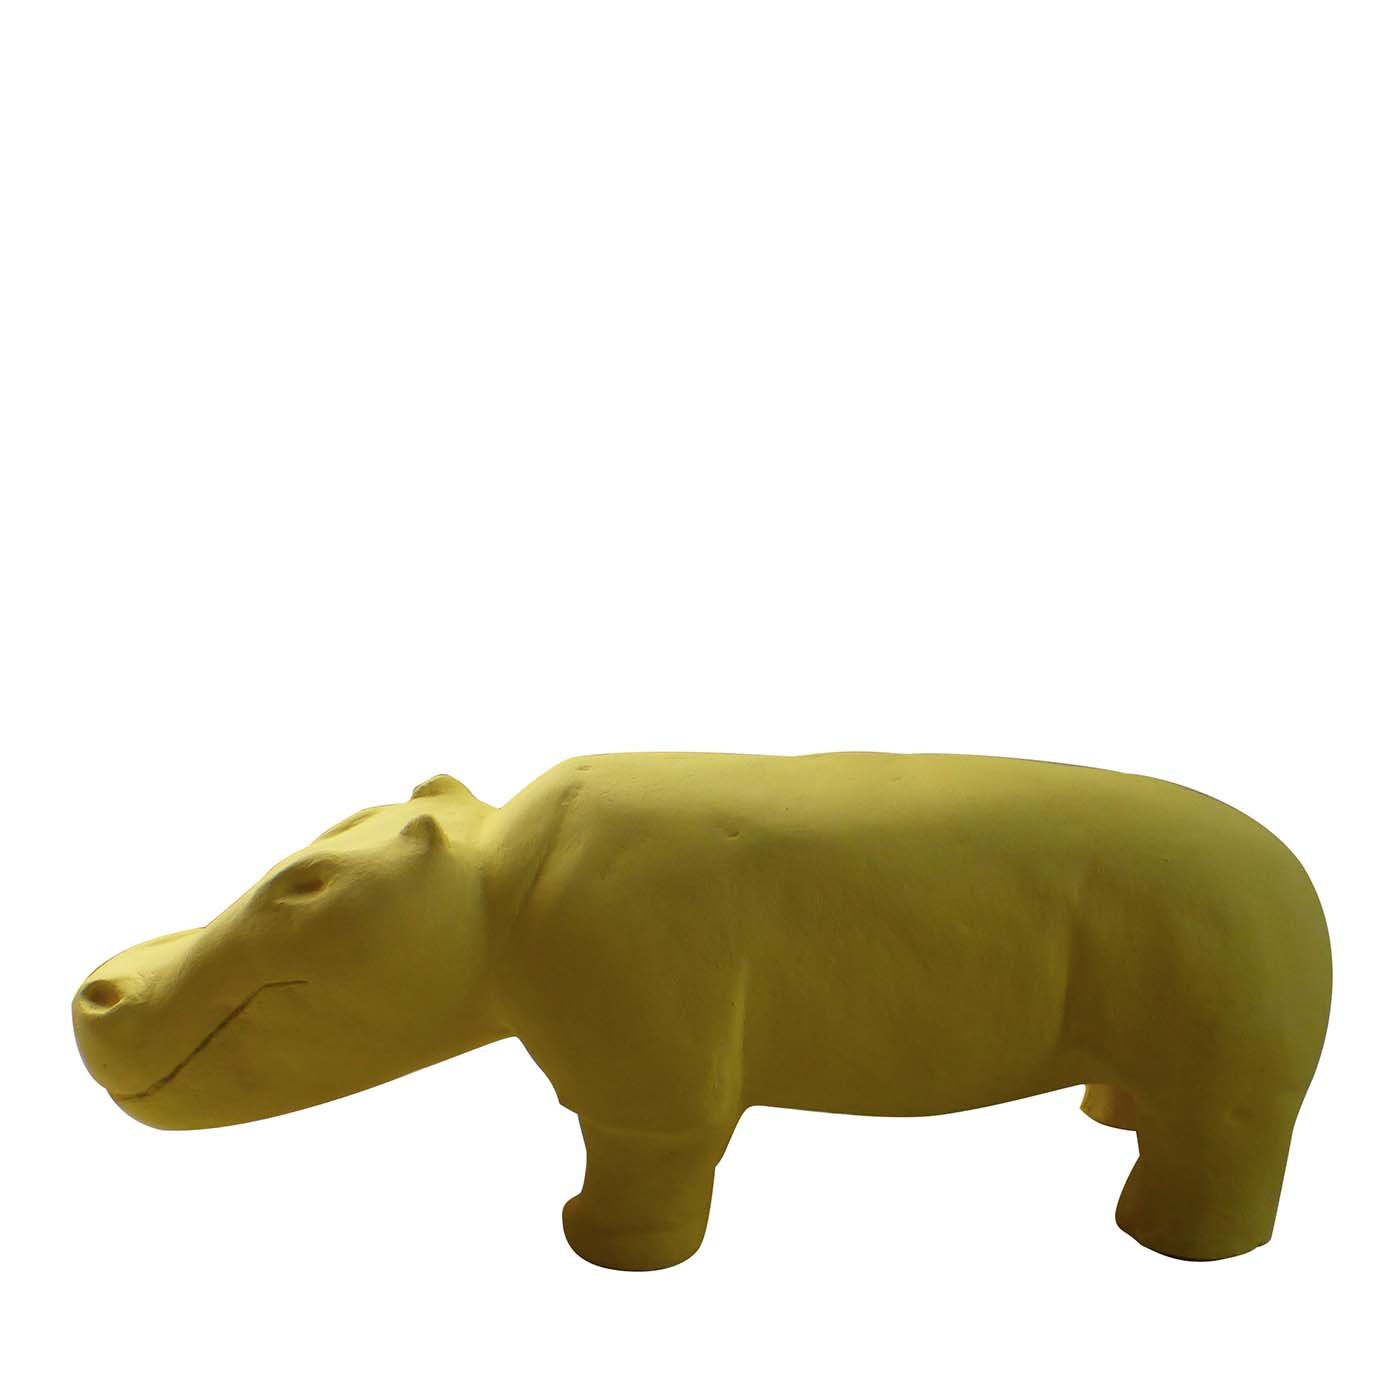 Sculpture de l'hippopotame jaune - Vue principale